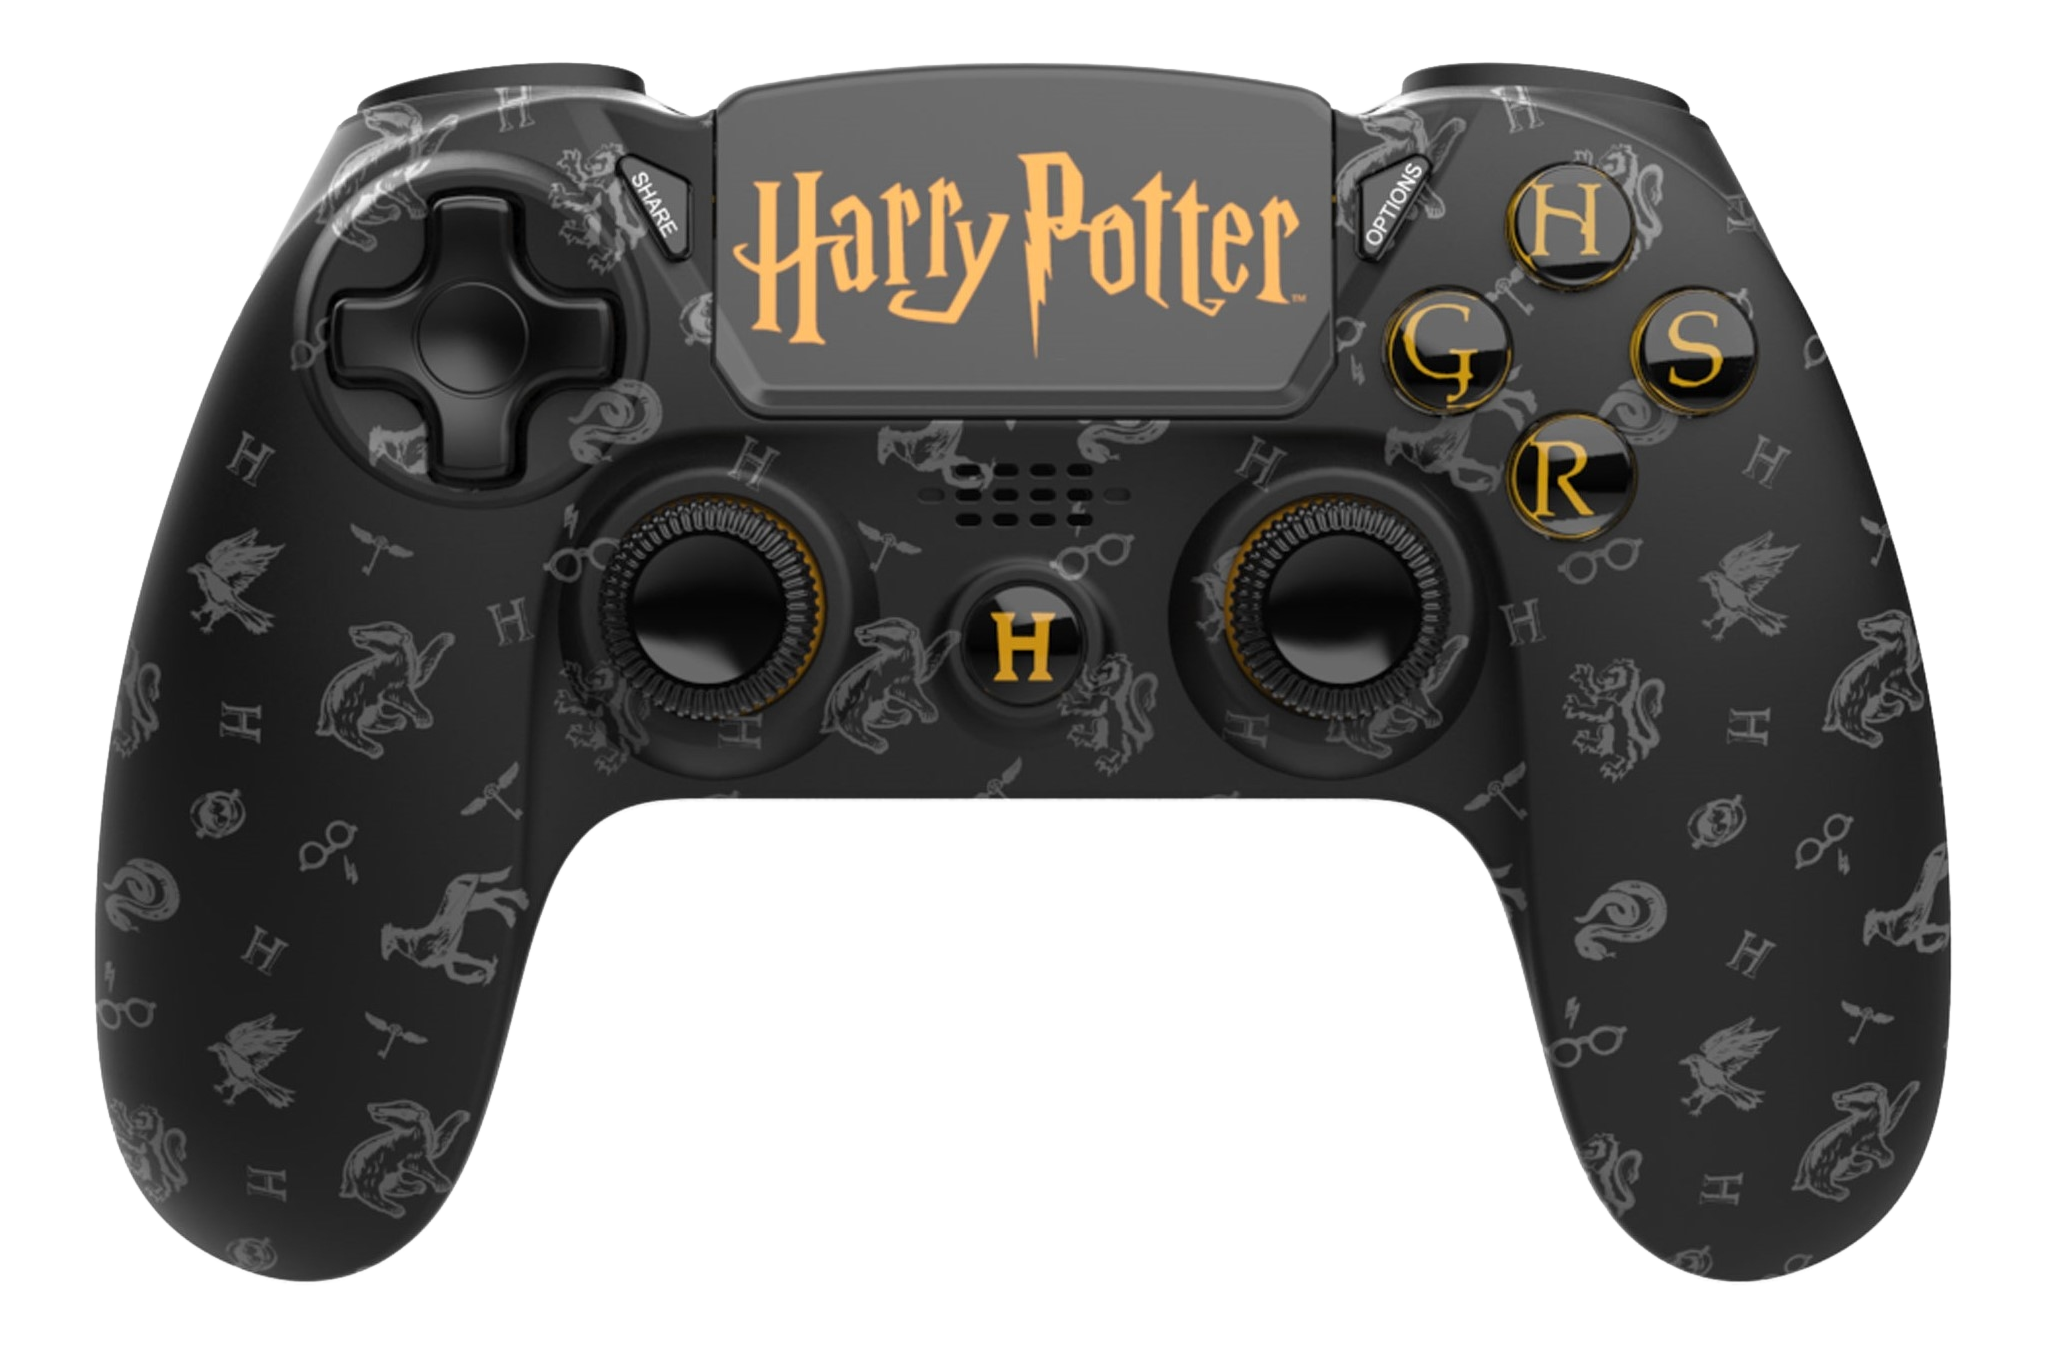 FREAKS AND GEEKS PS4 - Harry Potter - Wireless Controller (Schwarz/Grau/Gold)